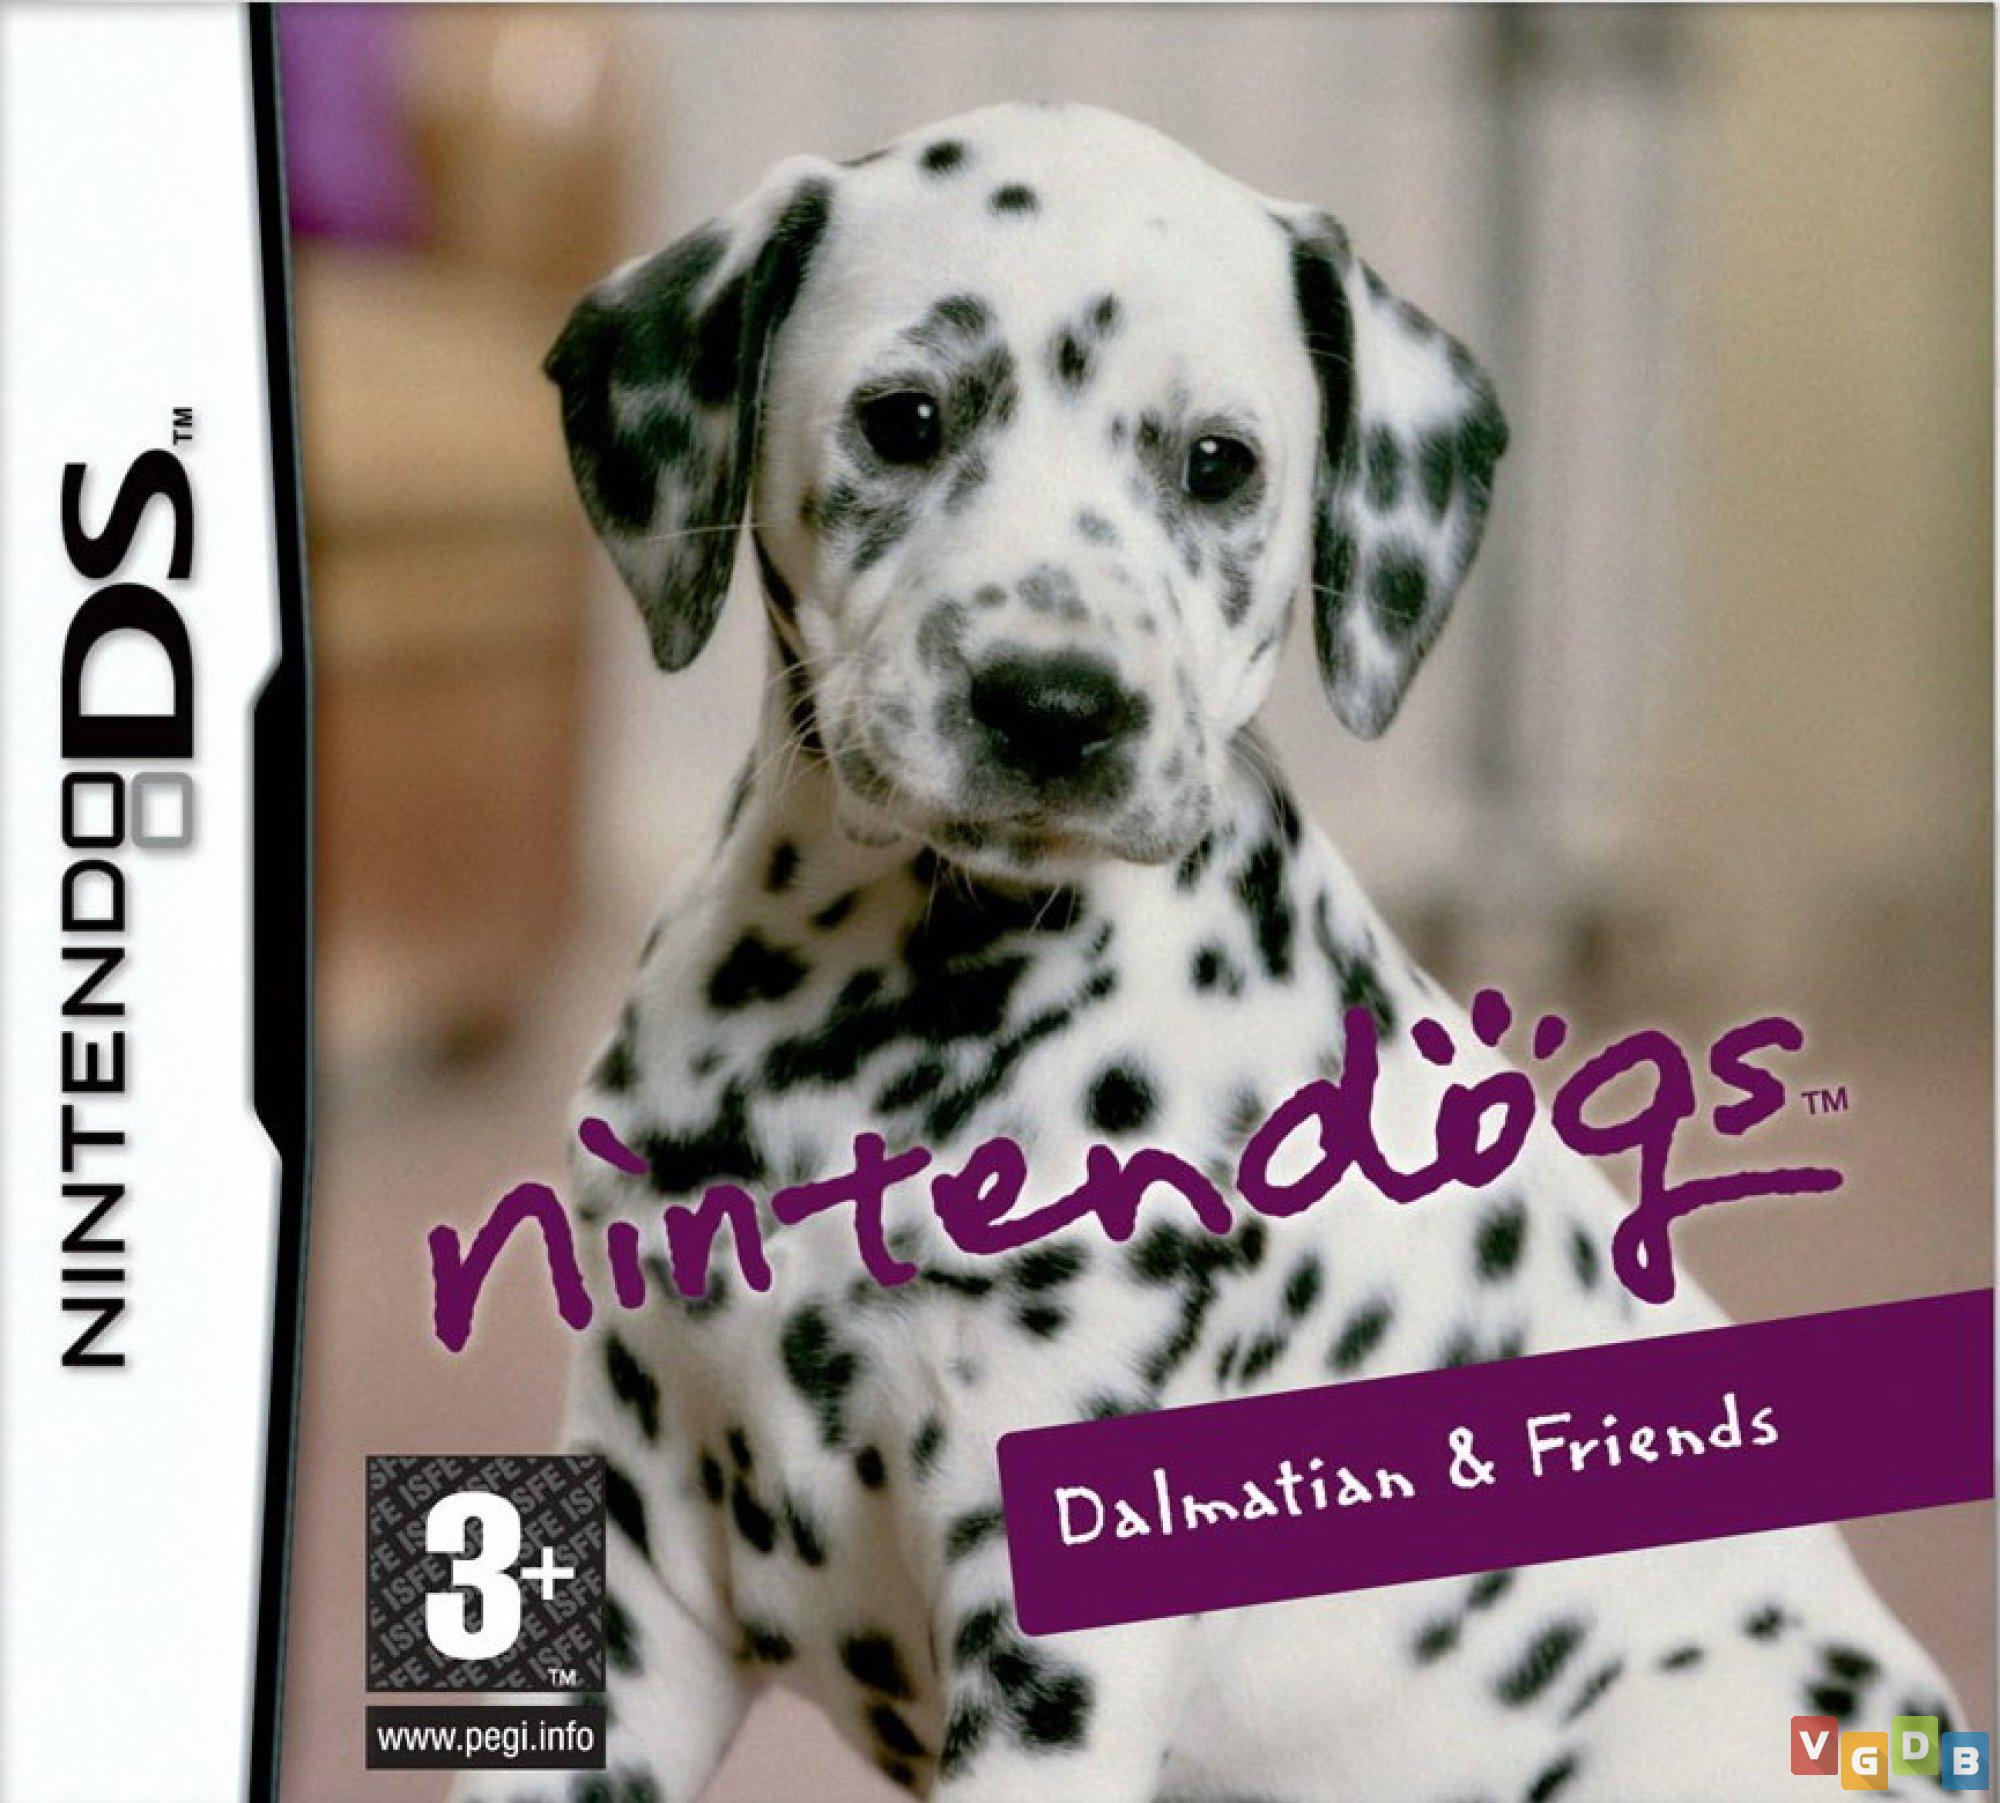 Nintendogs Dalmatian & Friends VGDB Vídeo Game Data Base